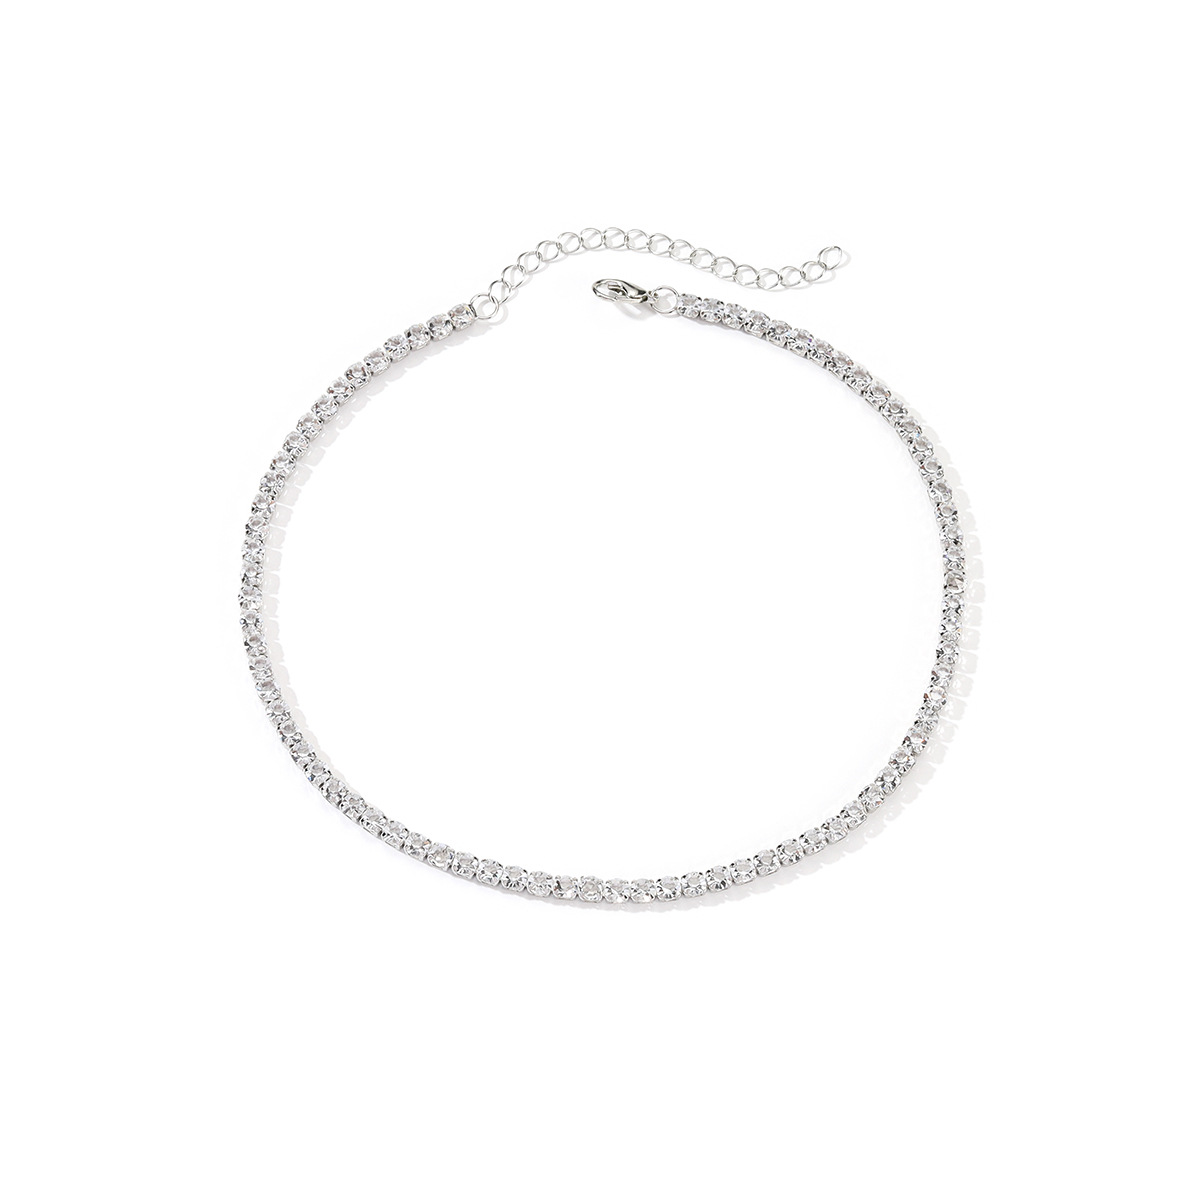 Transparent silver necklace